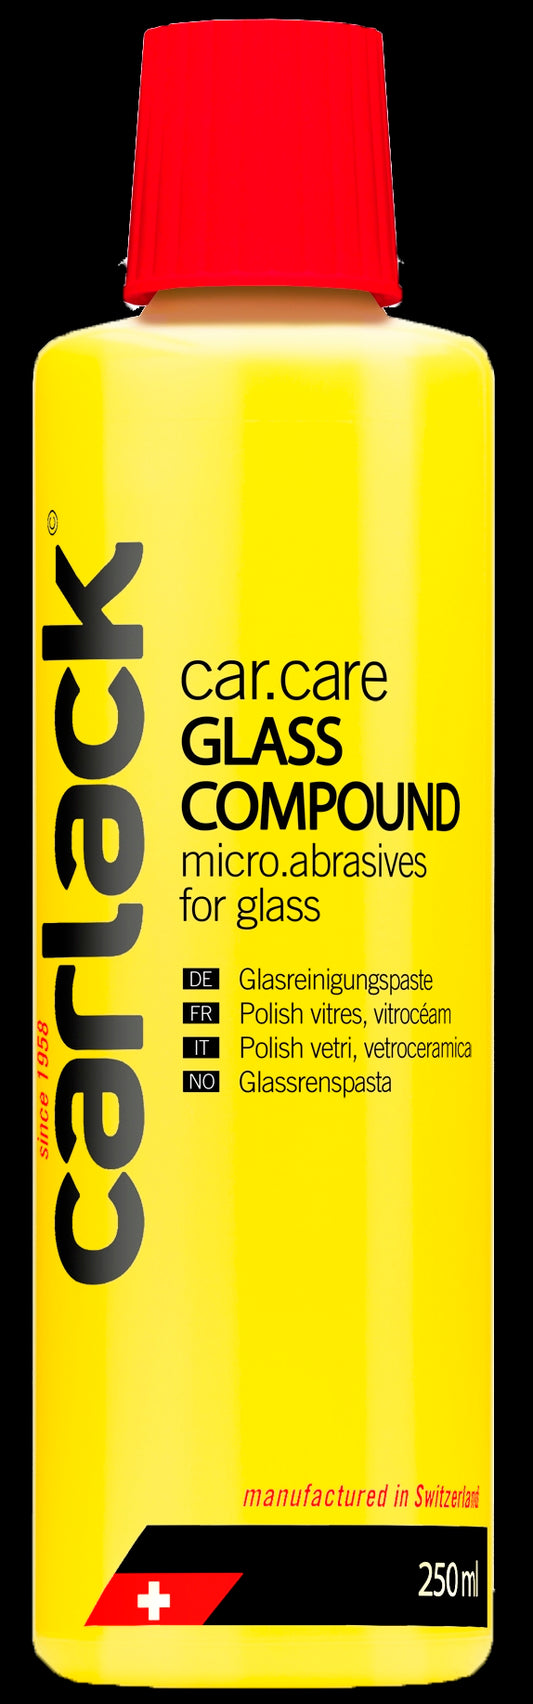 Carlack Glass Compound 250mL